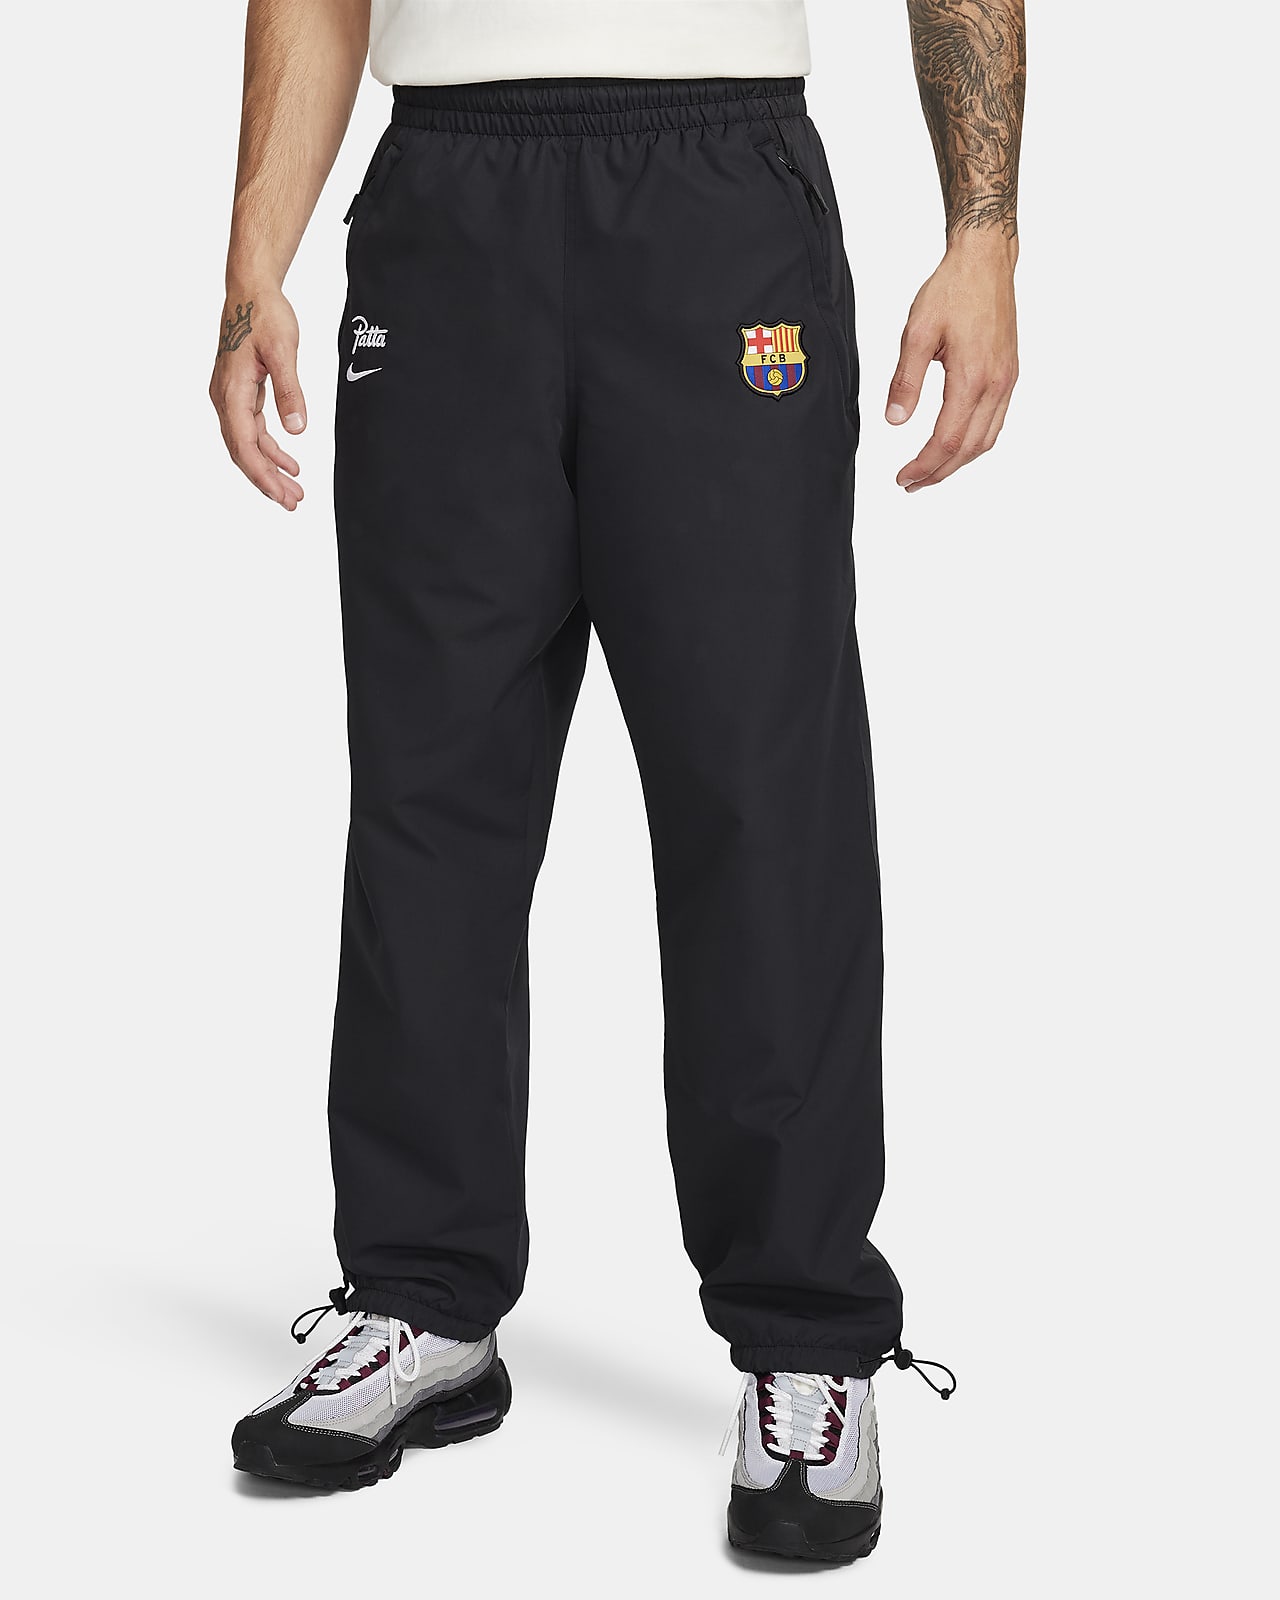 FC Barcelona x Patta Pantalons de xandall Nike de futbol - Home